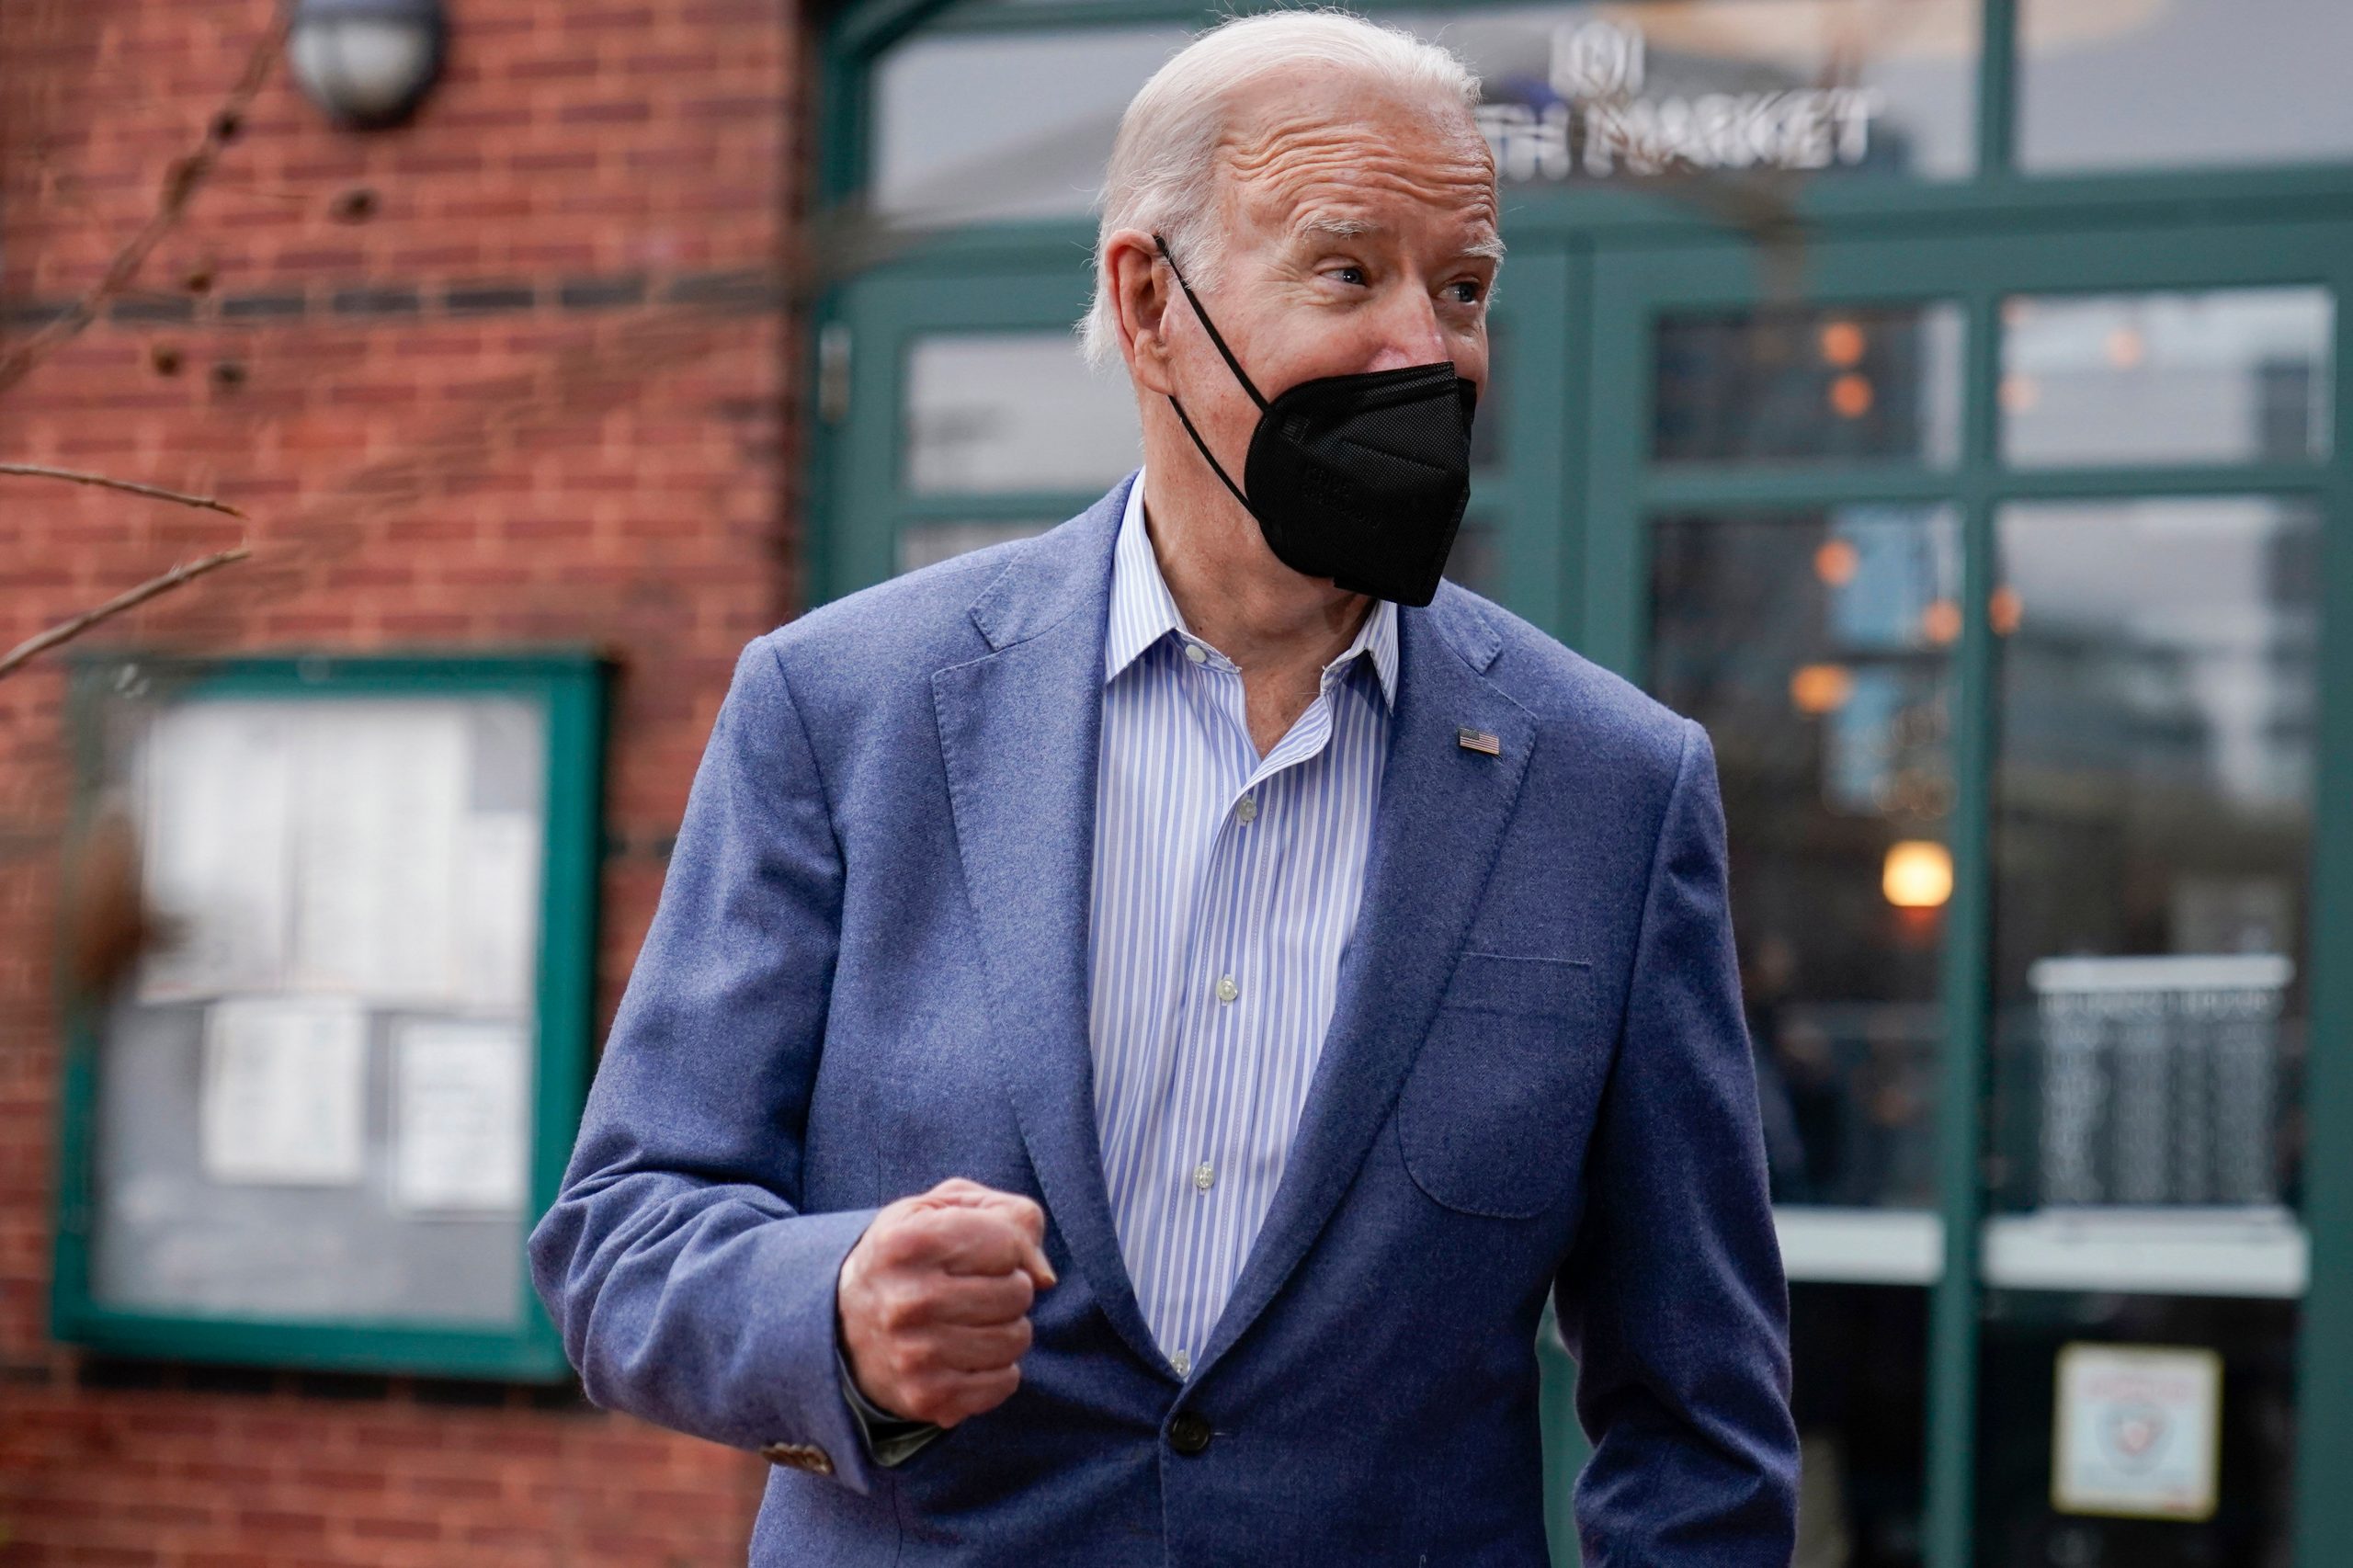 US President Joe Biden urges concern, not alarm as omicron rises